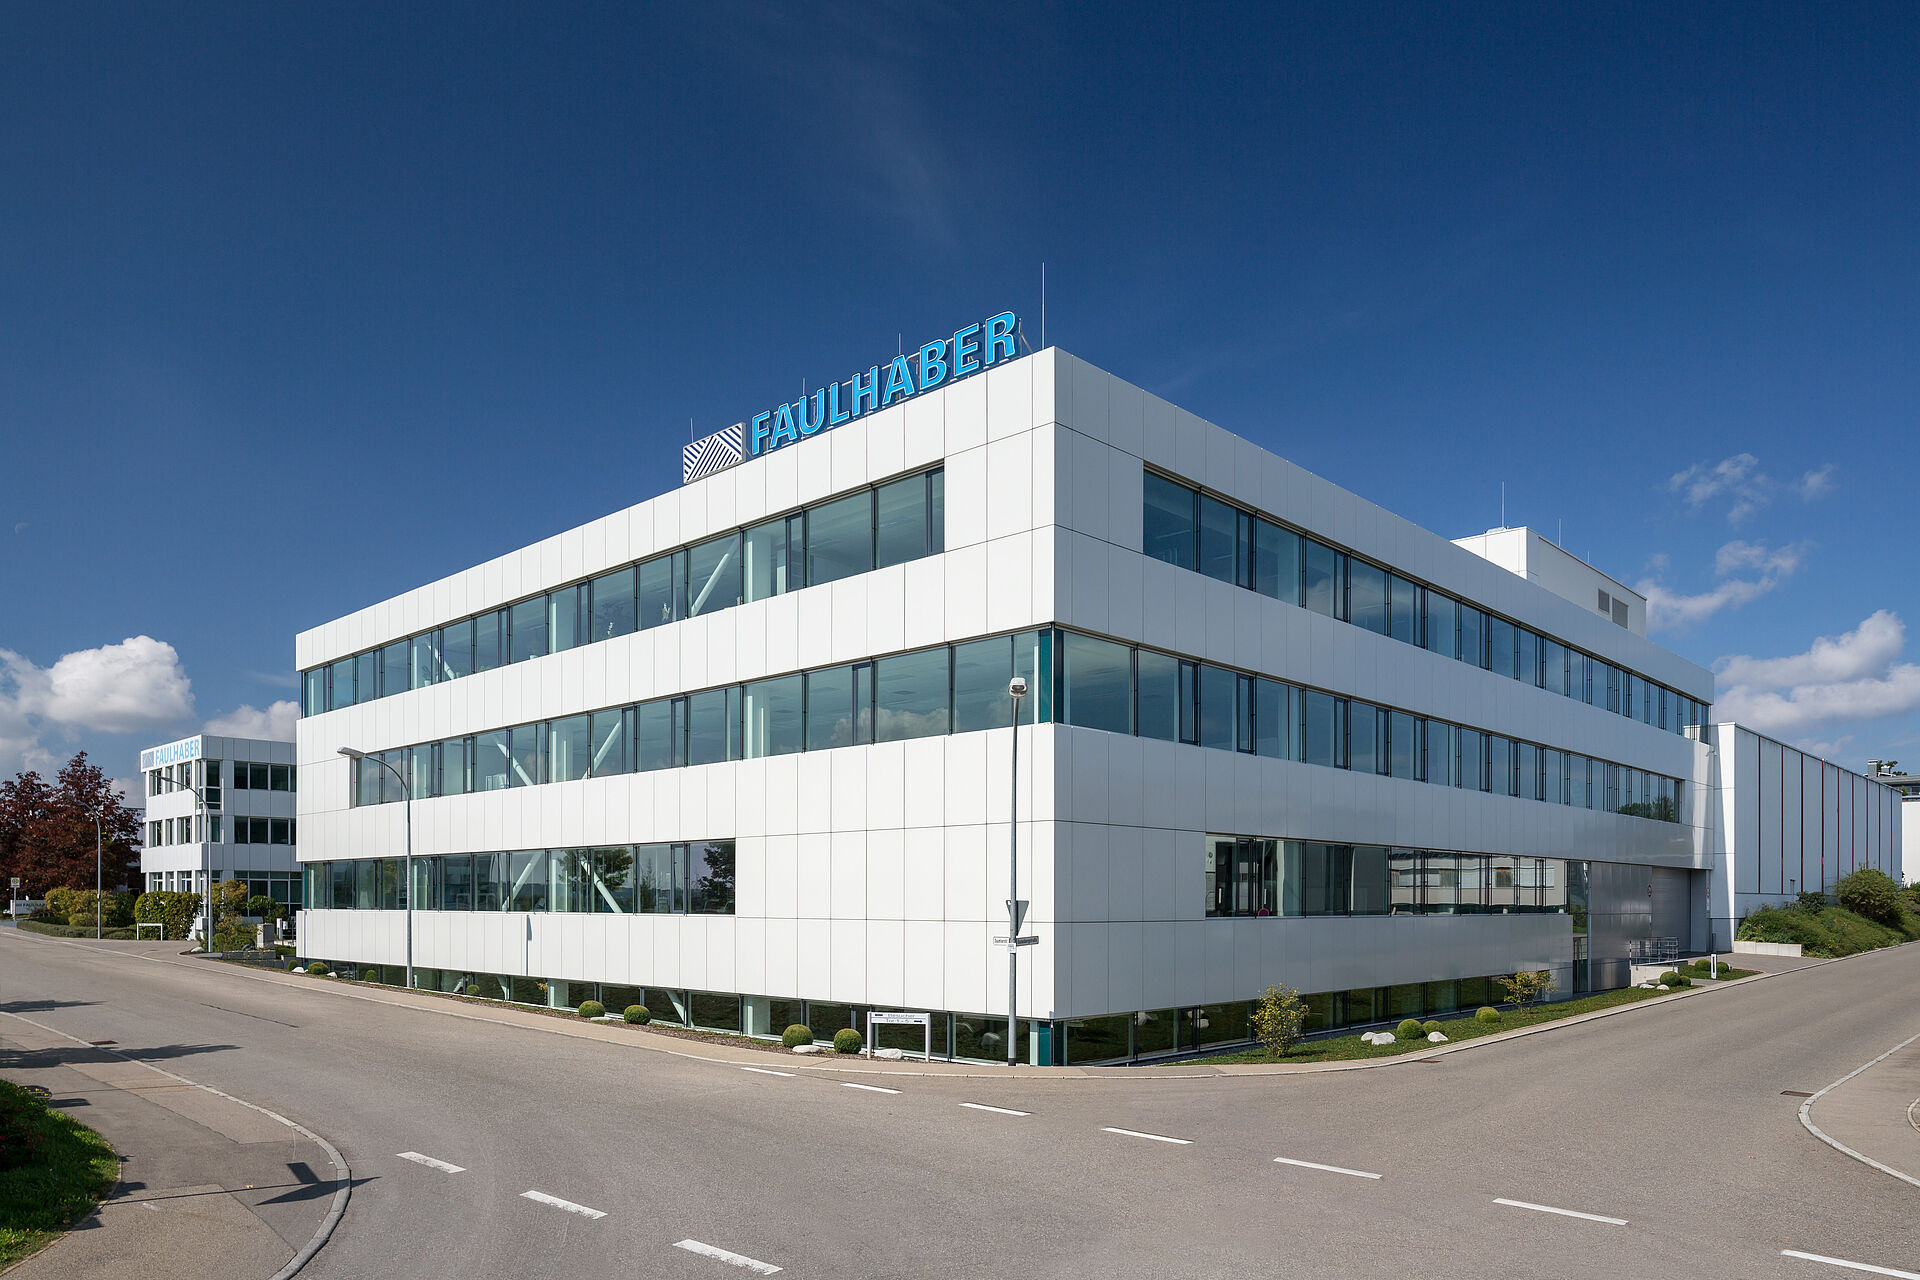 Building of Dr. Fritz Faulhaber GmbH & Co. KG, Schönaich, Germany